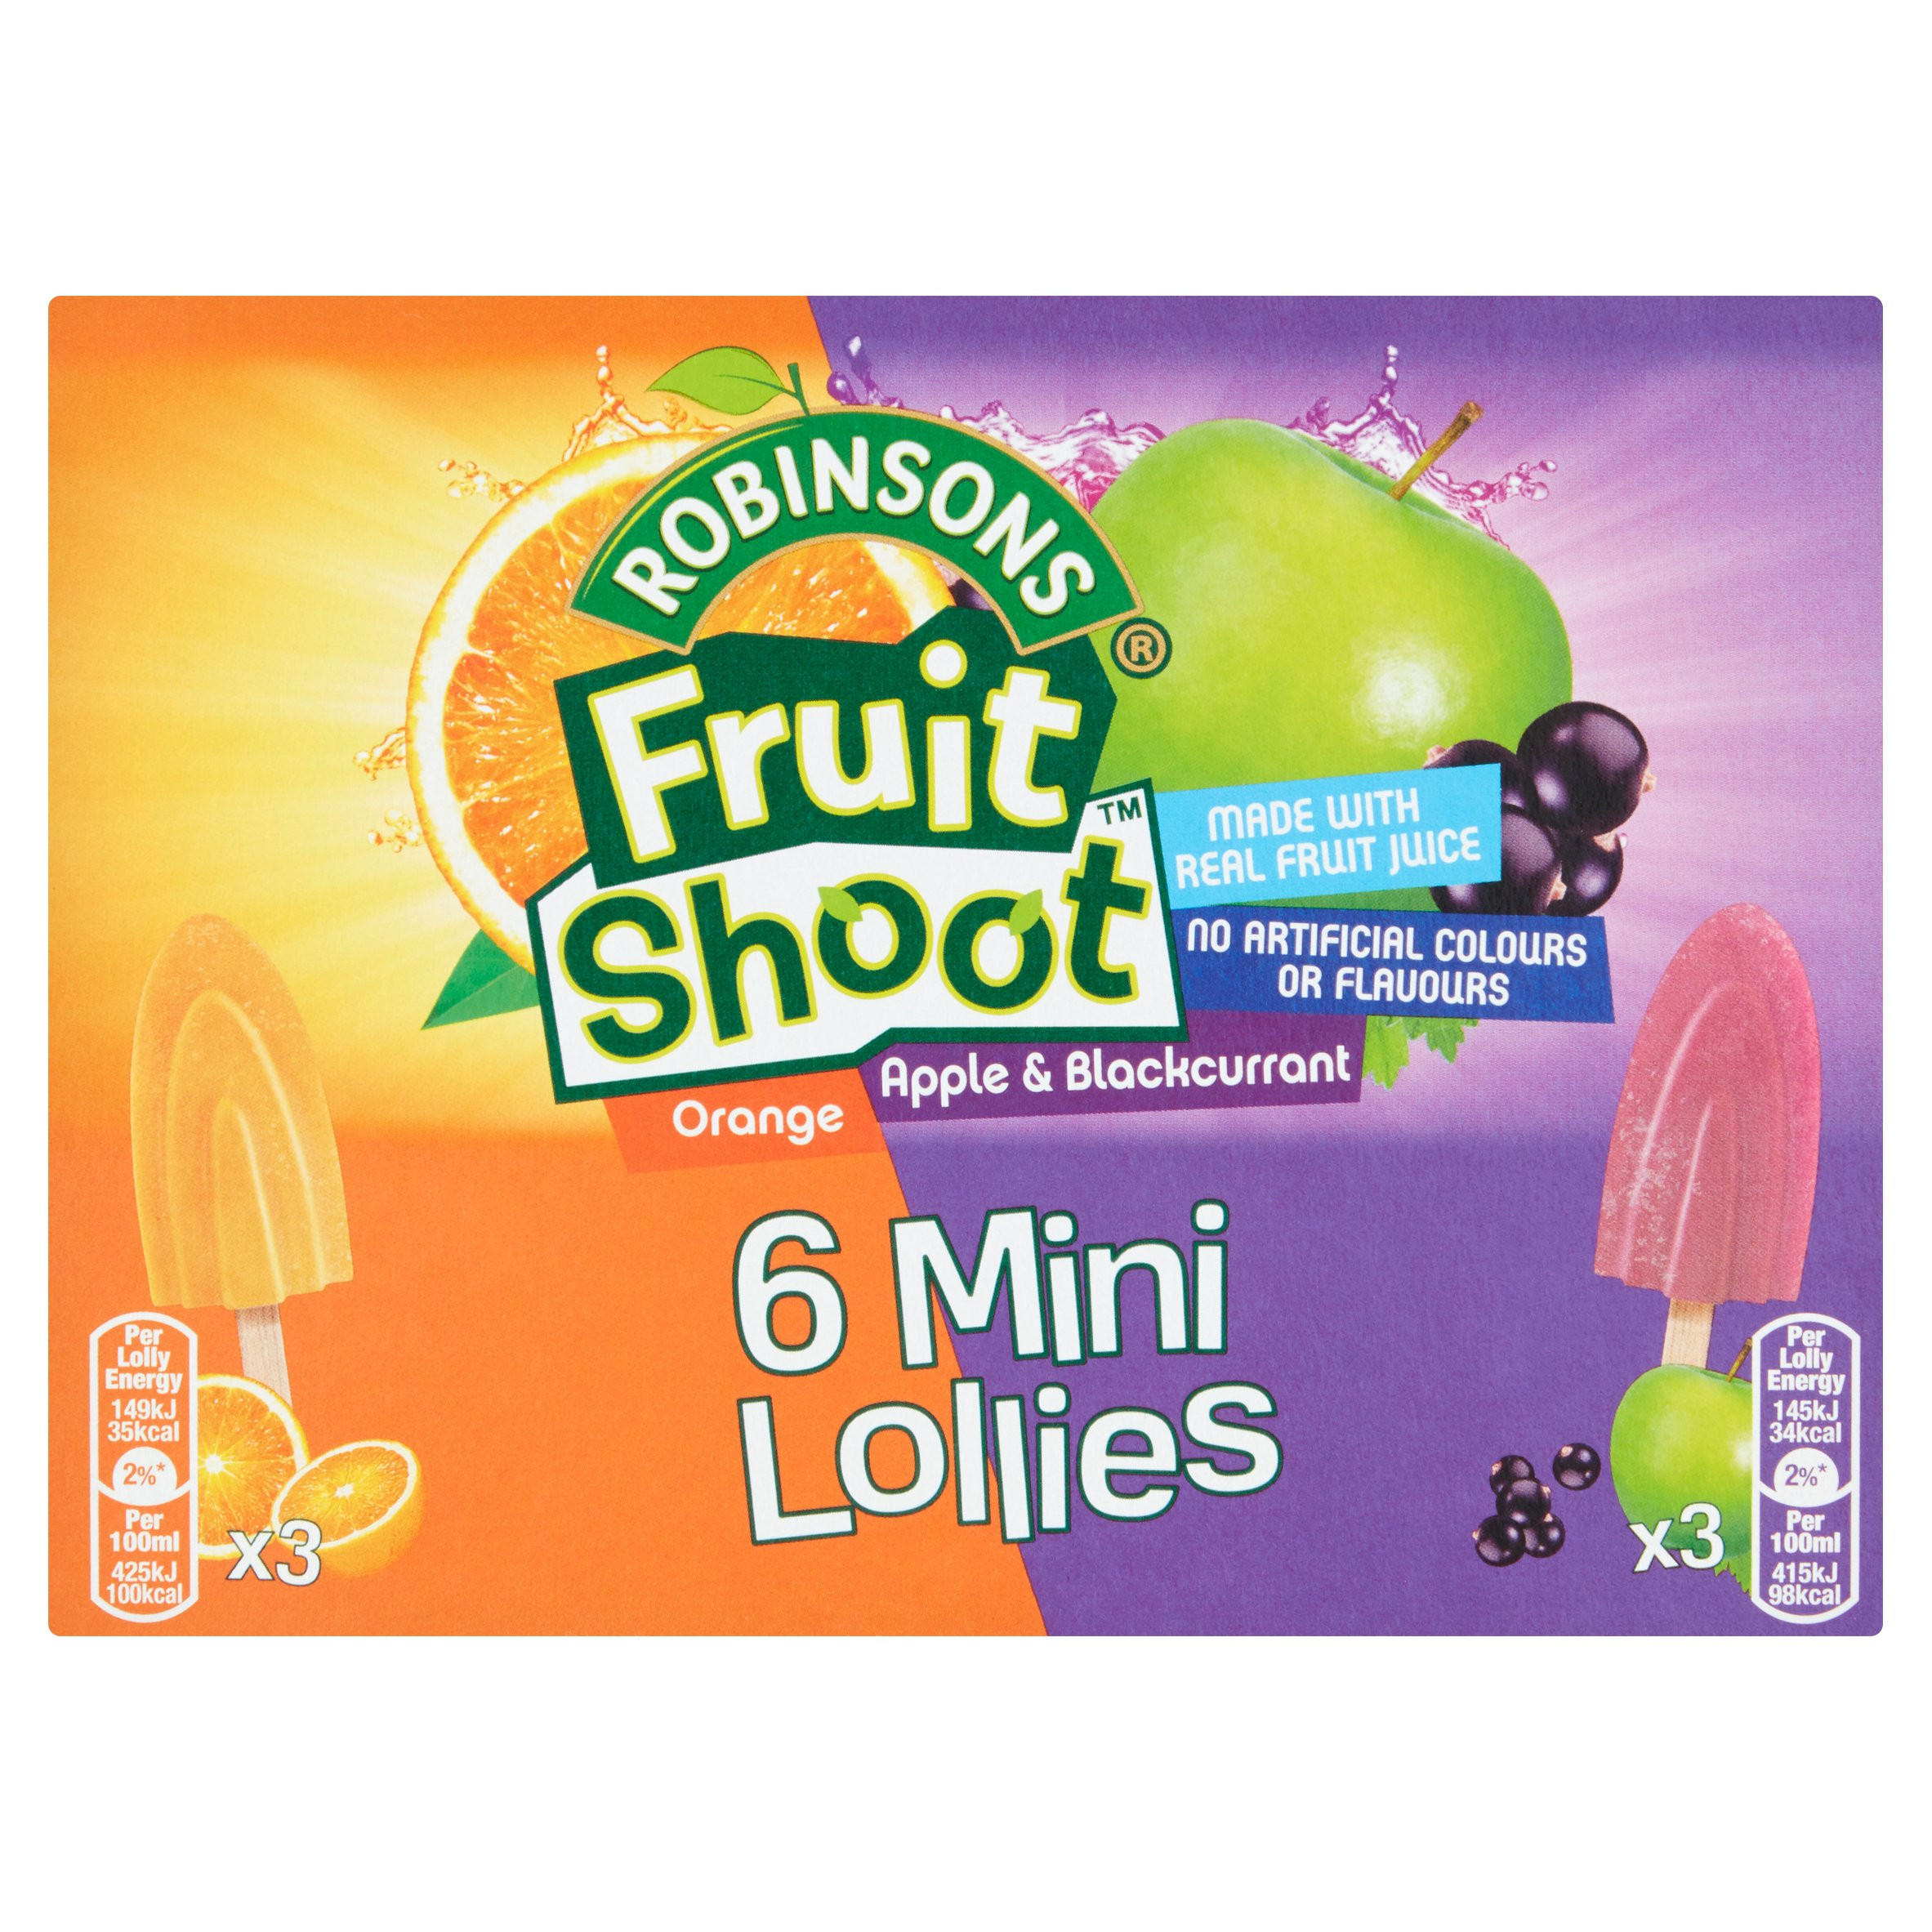 Robinsons Fruit Shoot Orange, Apple & Blackcurrant Mini Lollies 6